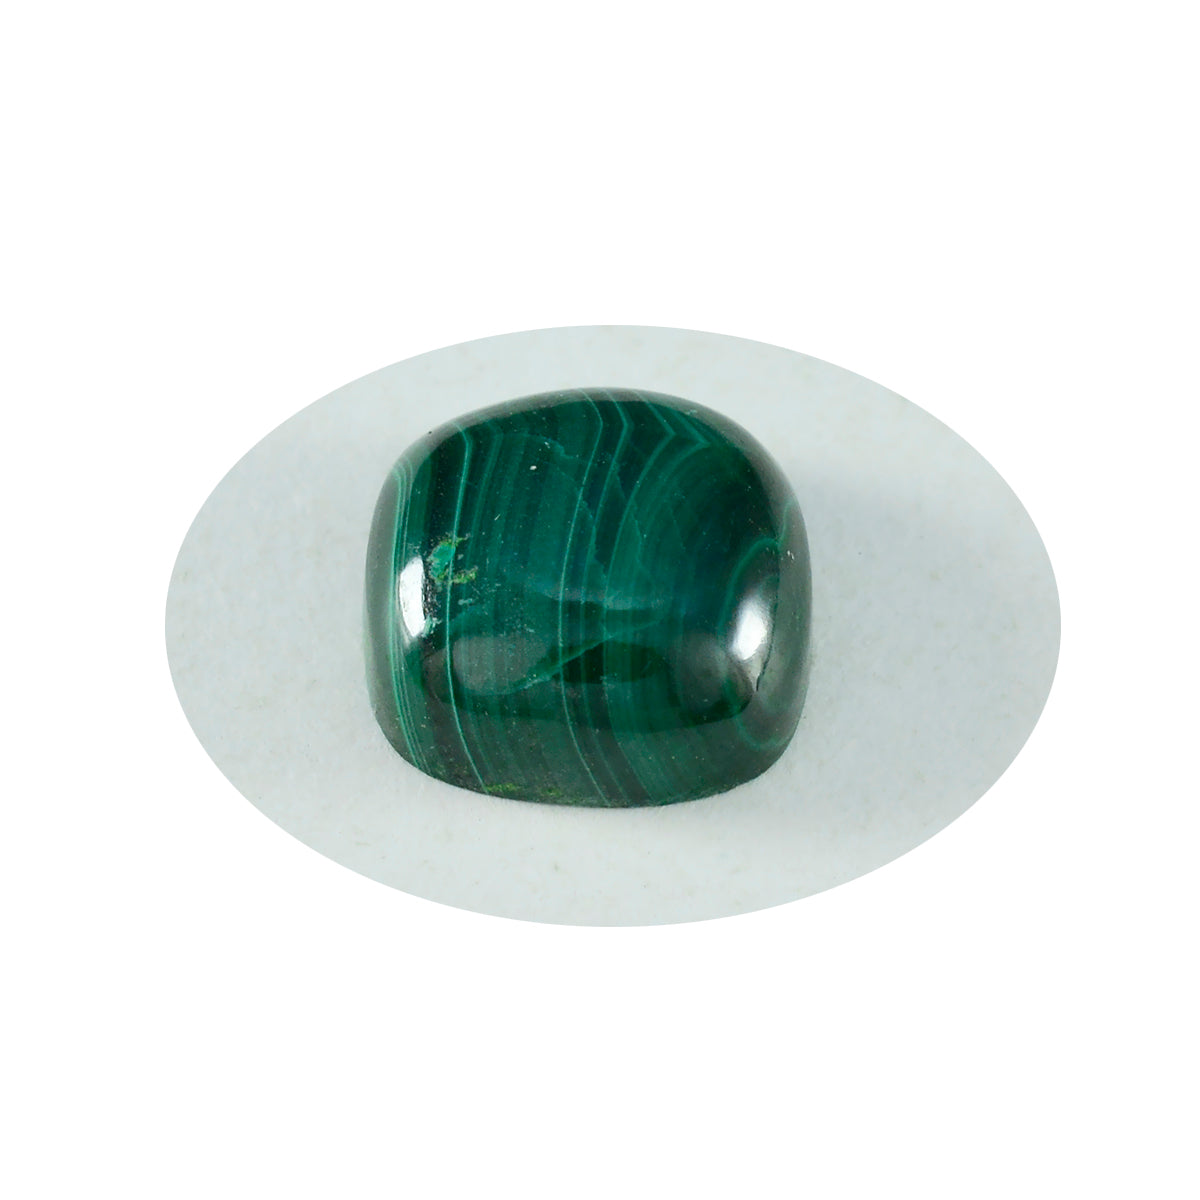 riyogems 1pc グリーン マラカイト カボション 15x15 mm クッション形状 aaa 品質宝石